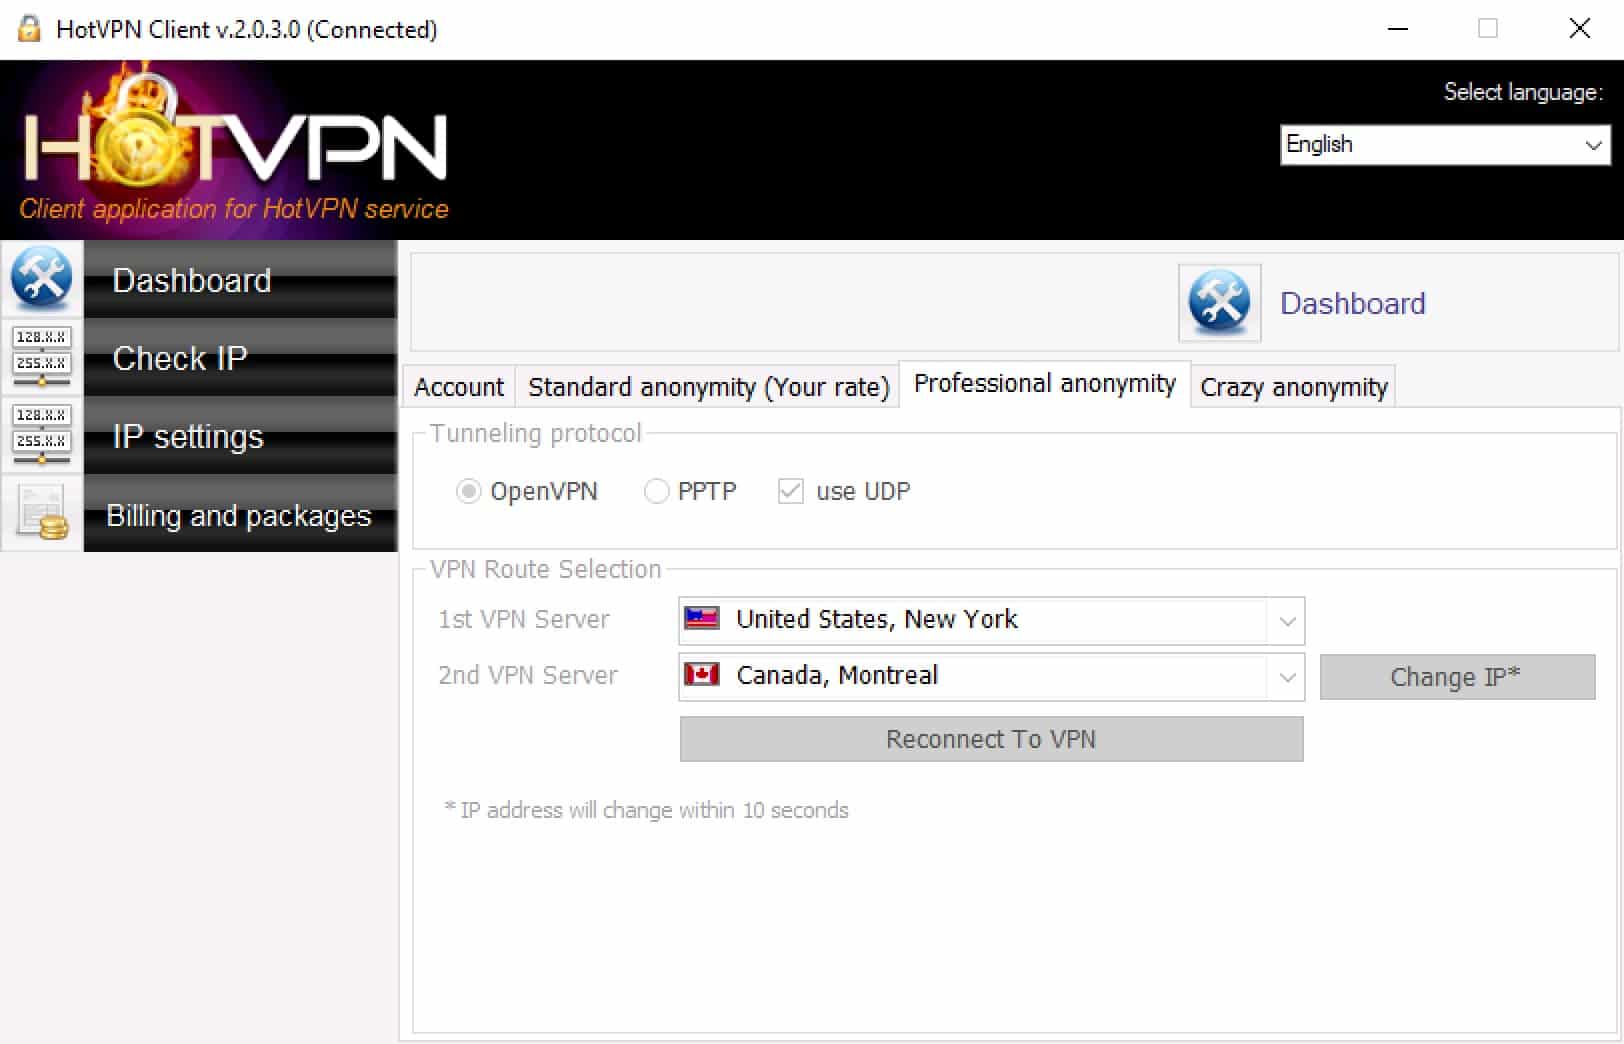 HOT VPN - Professional Anonymity